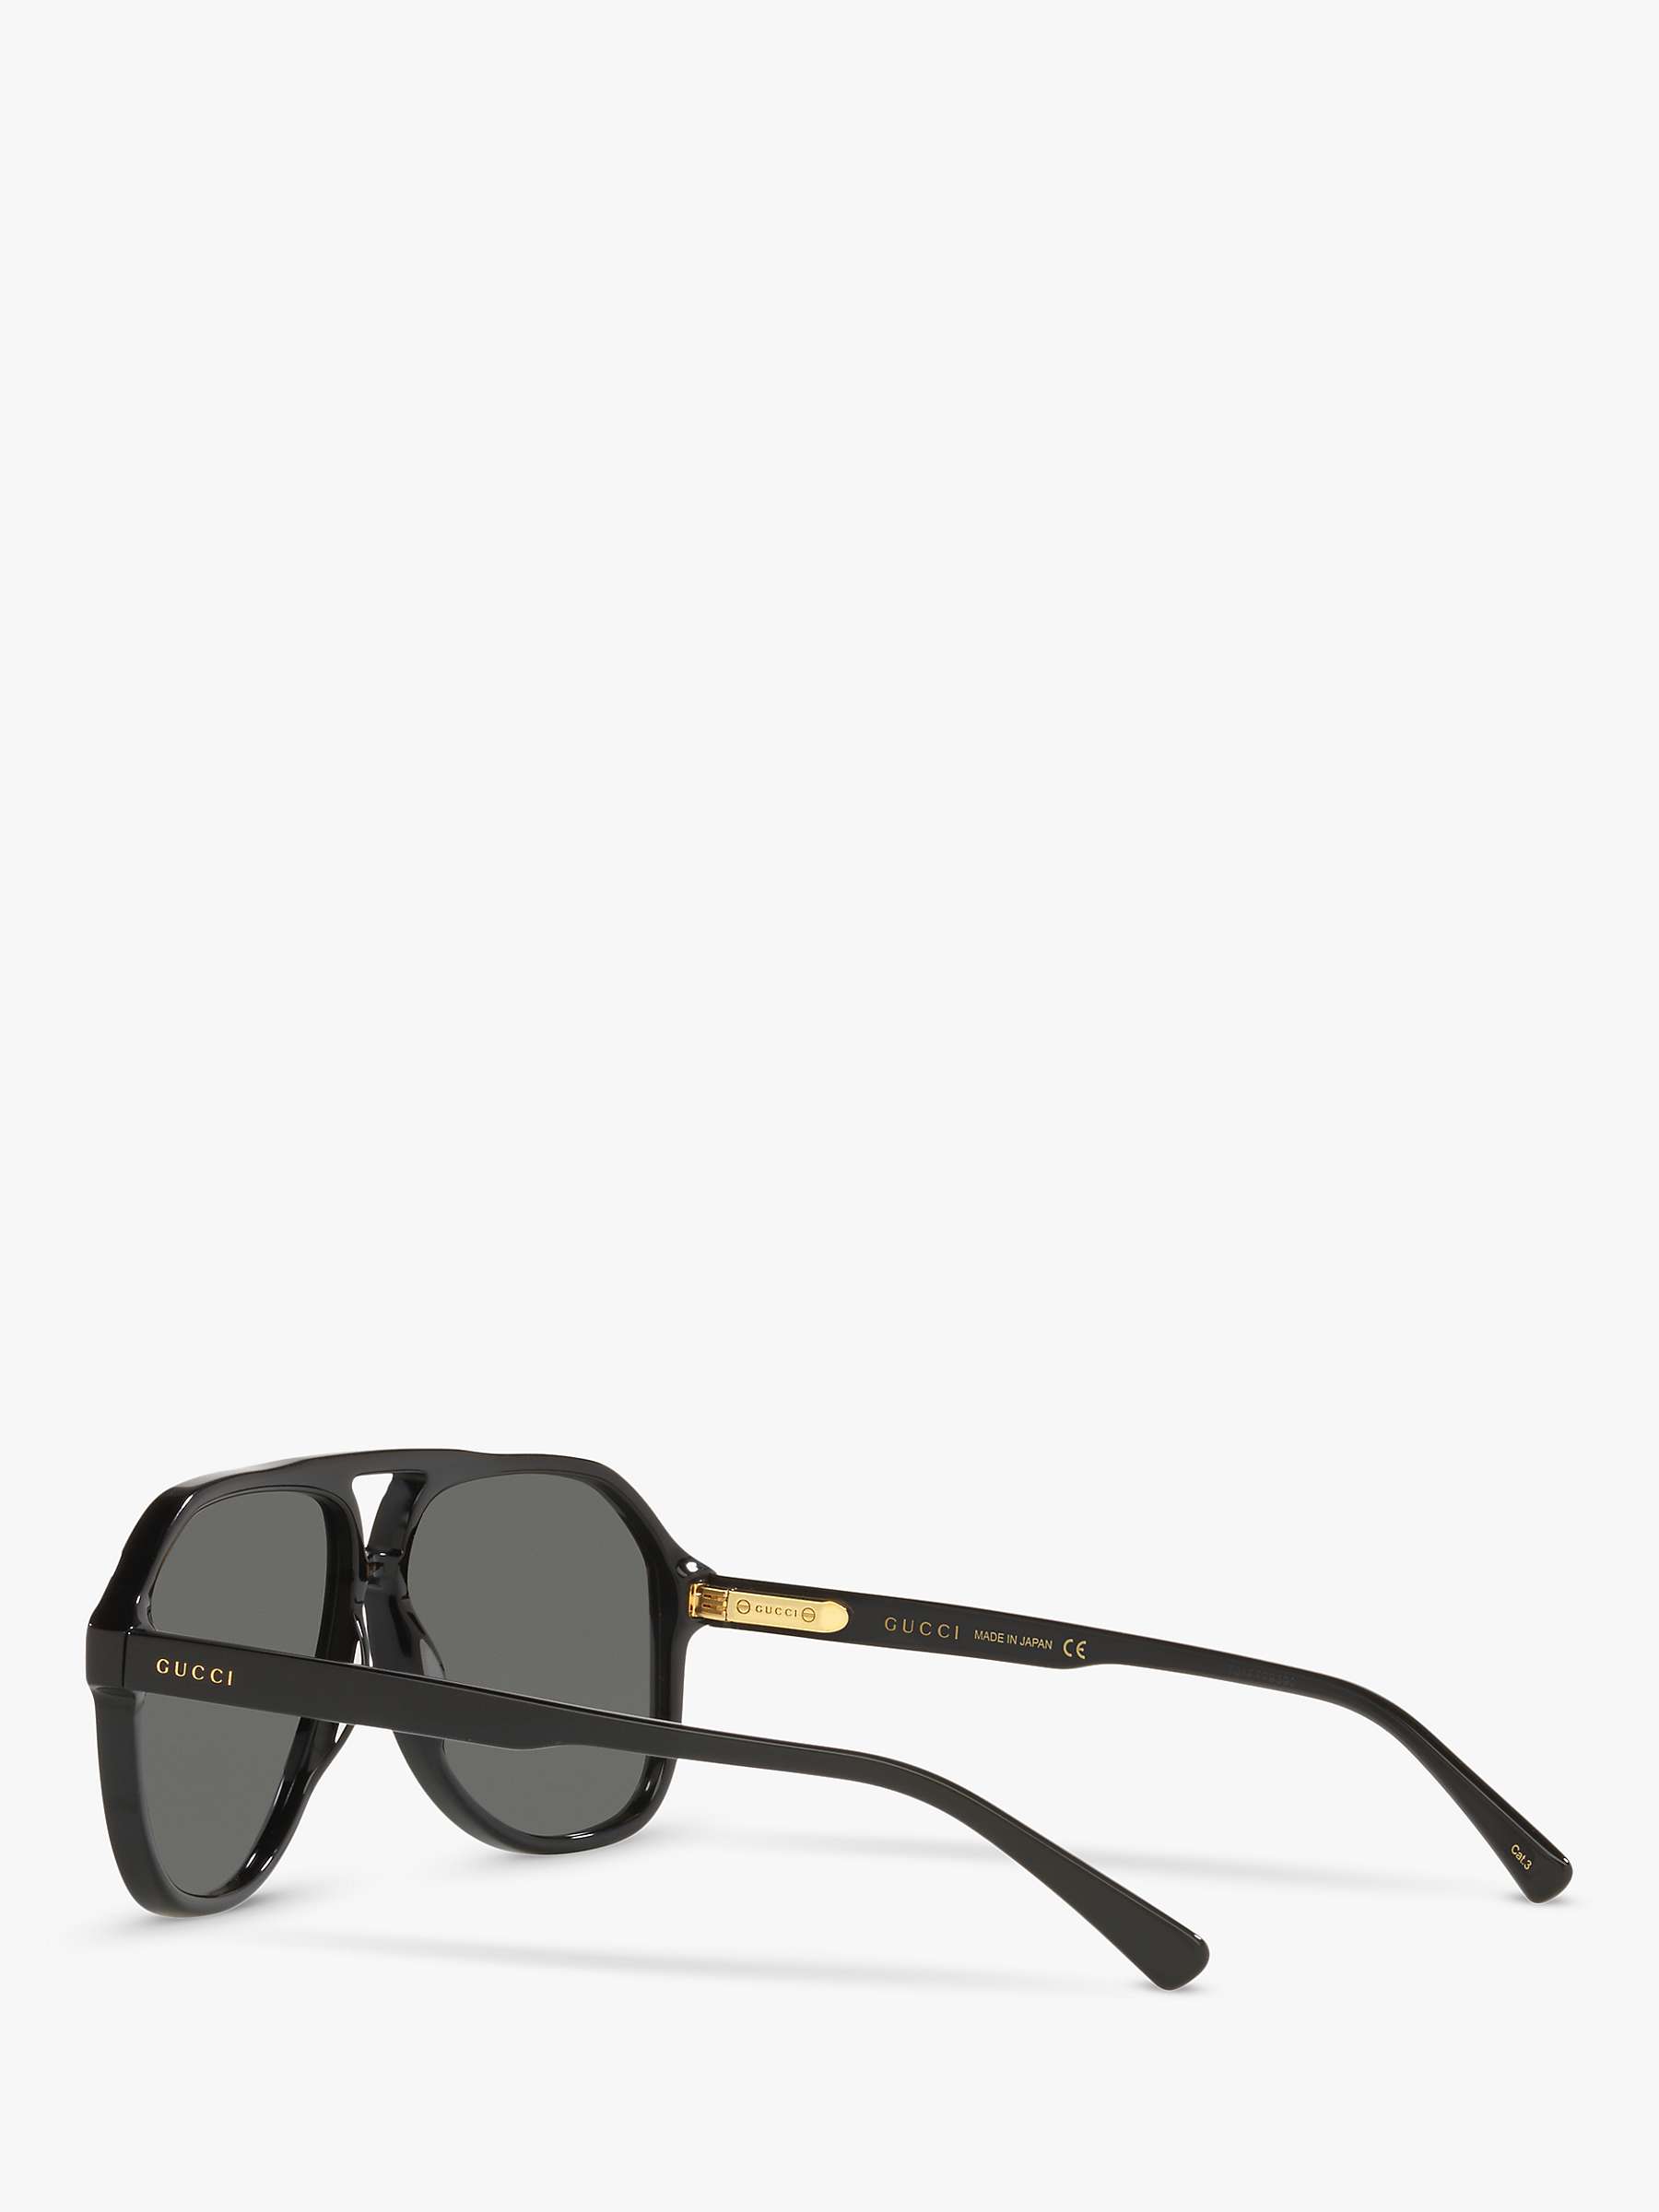 Buy Gucci GG1042S Men's Aviator Sunglasses, Black/Grey Online at johnlewis.com